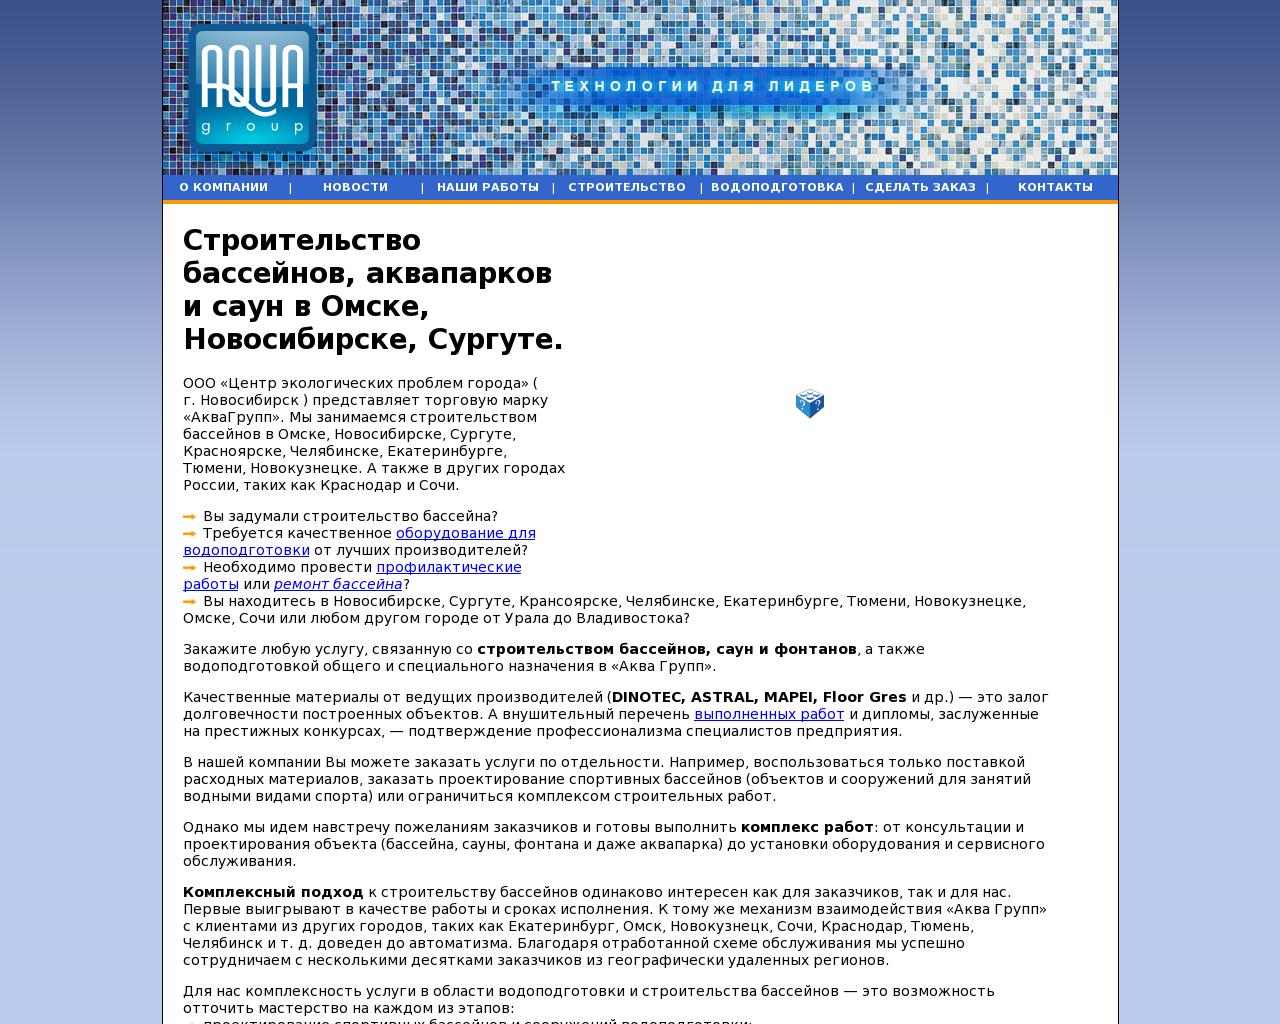 Изображение сайта aqgroup.ru в разрешении 1280x1024